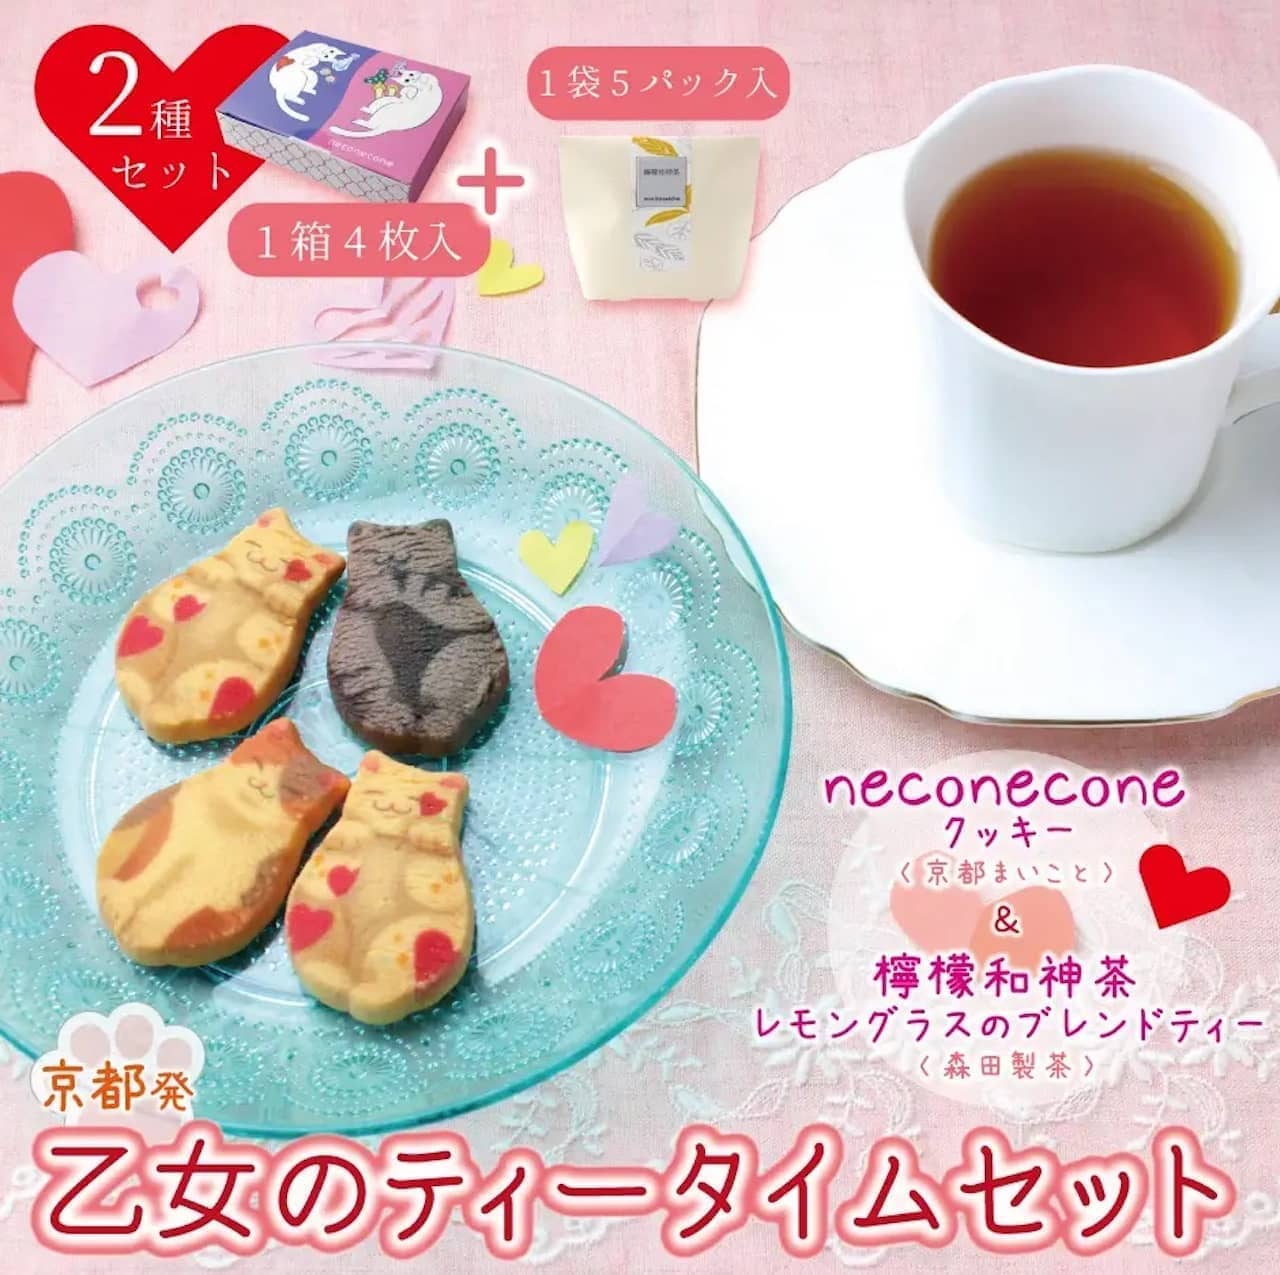 Marugoto Kyoto Direct Sales "Maiden Tea Time Set